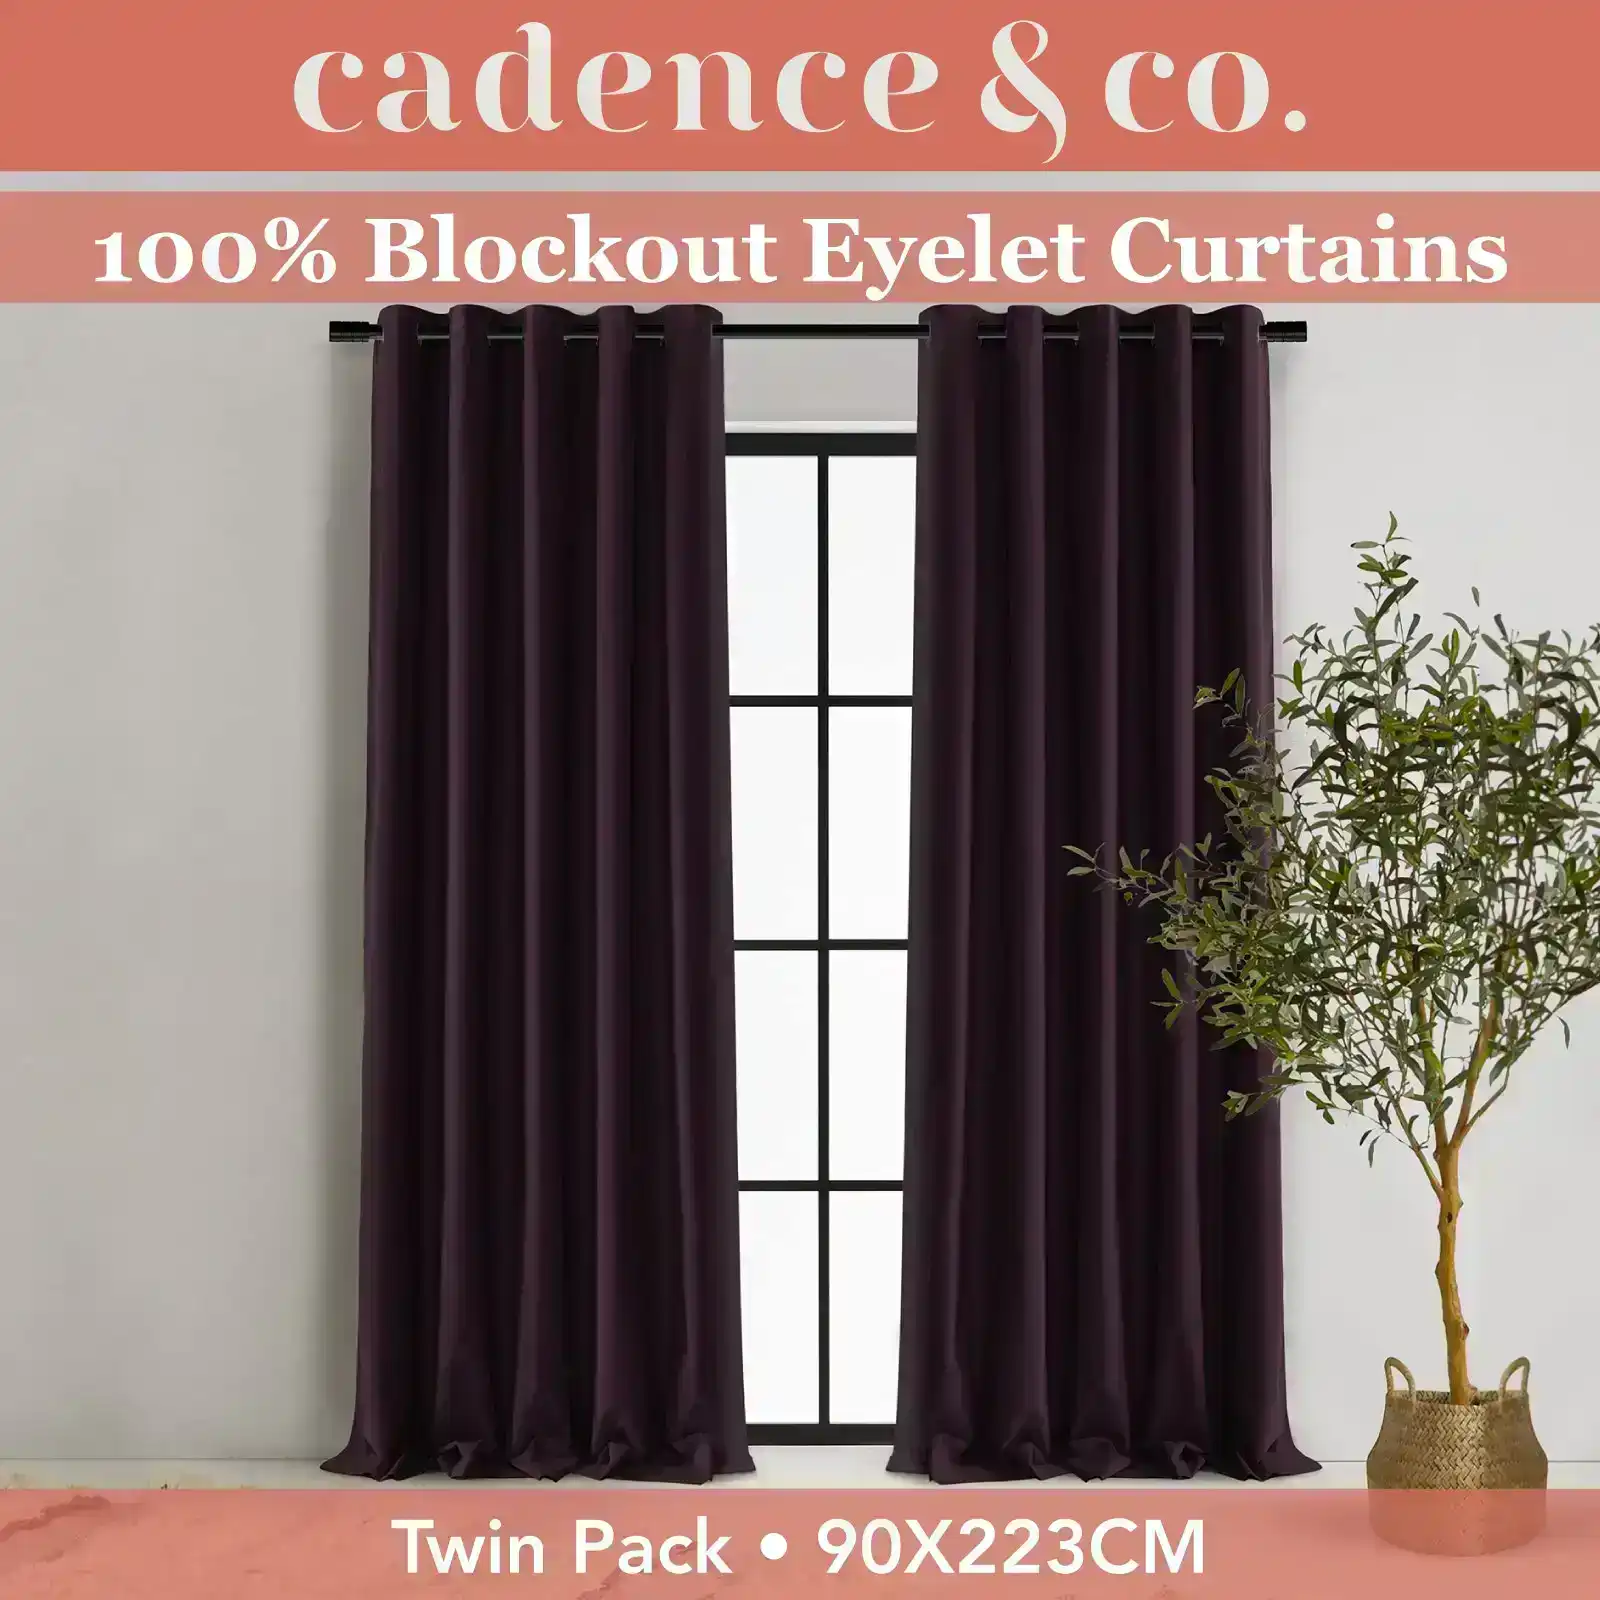 Cadence & Co Byron Matte Velvet 100% Blockout Eyelet Curtains Twin Pack Aubergine 90x223cm